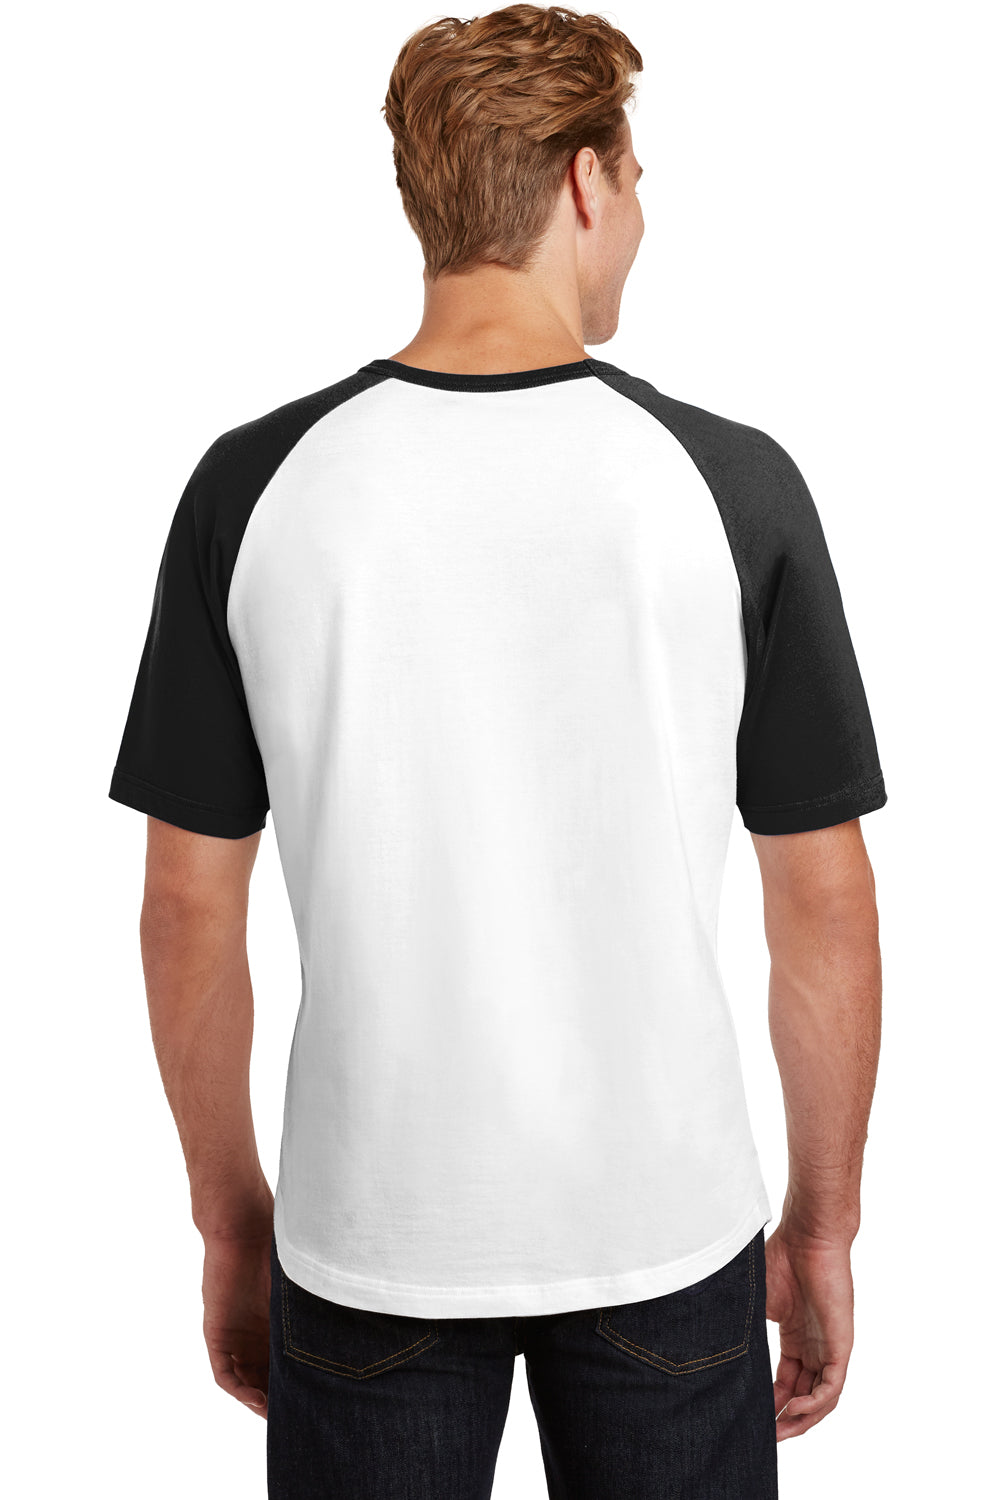 Sport-Tek T201 Mens Short Sleeve Crewneck T-Shirt White/Black Back